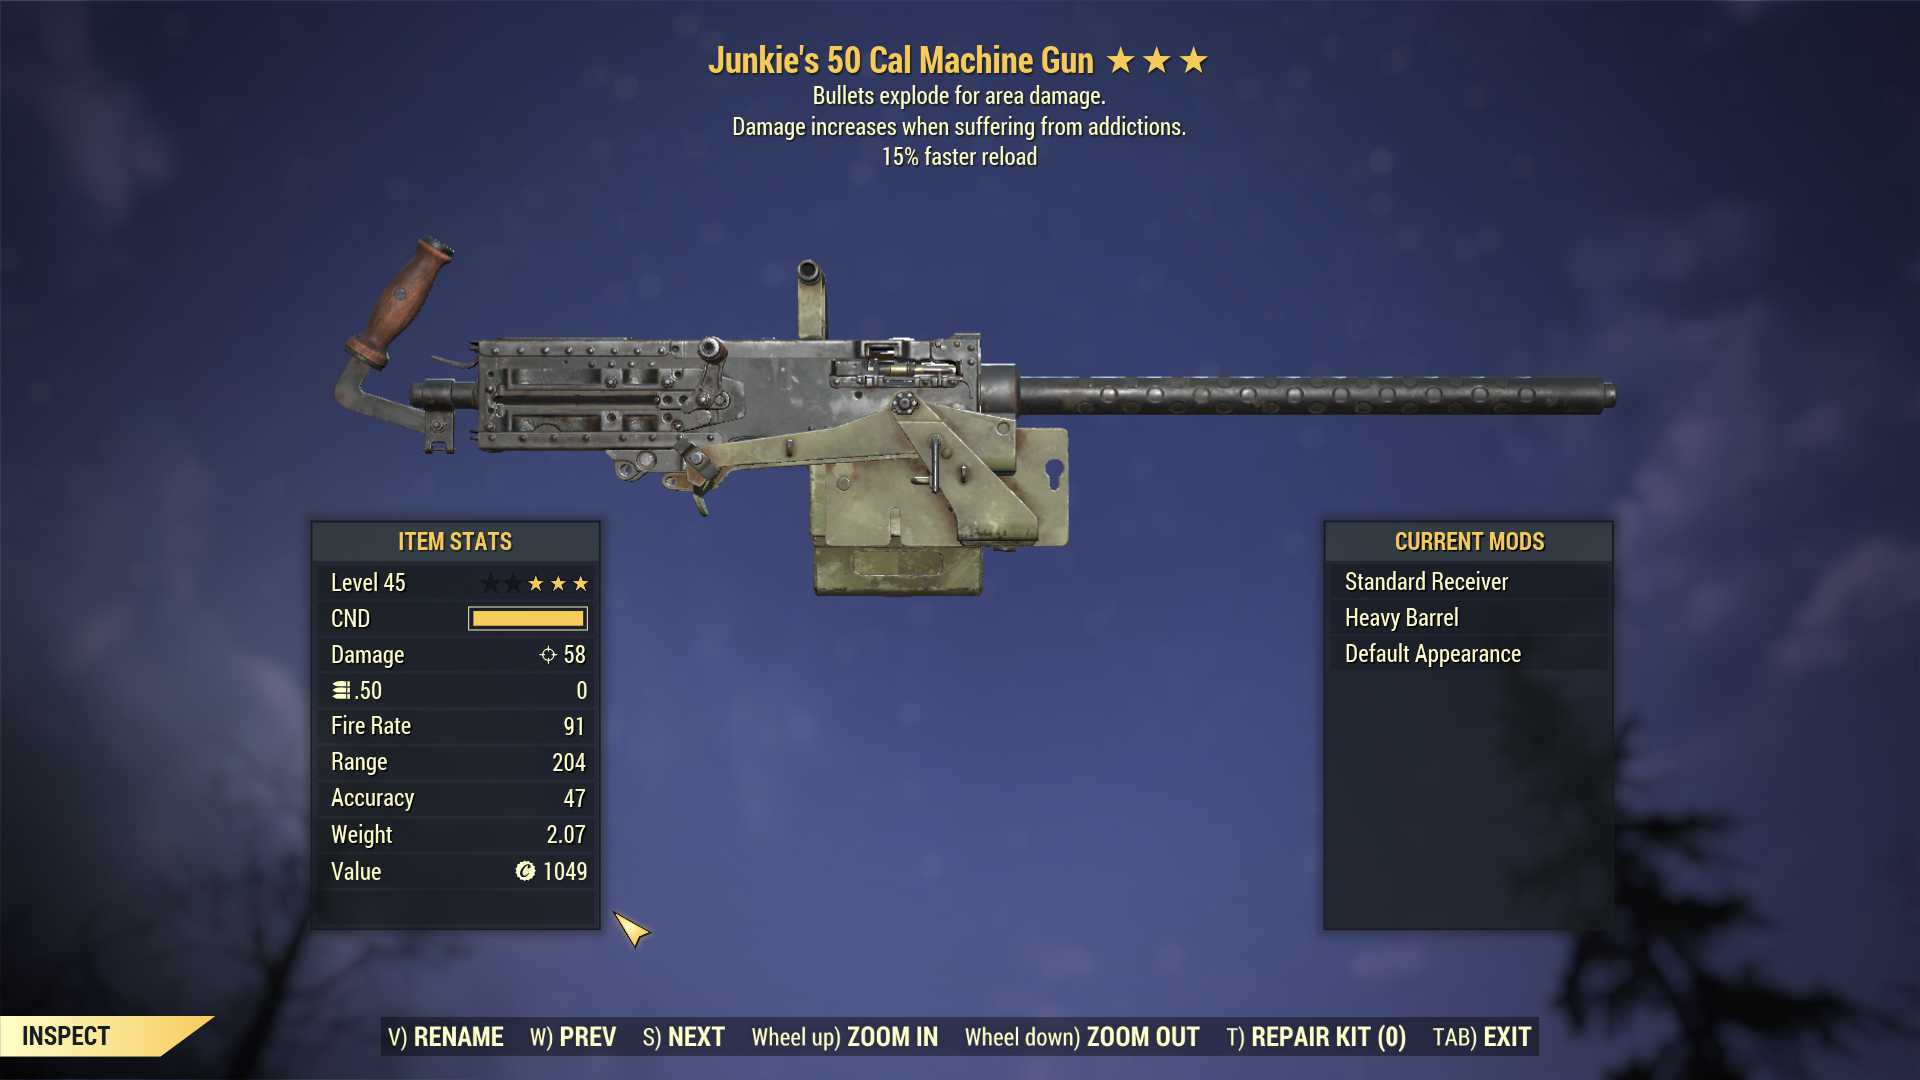 Junkie's Explosive 50 Cal Machine Gun (15% faster reload)